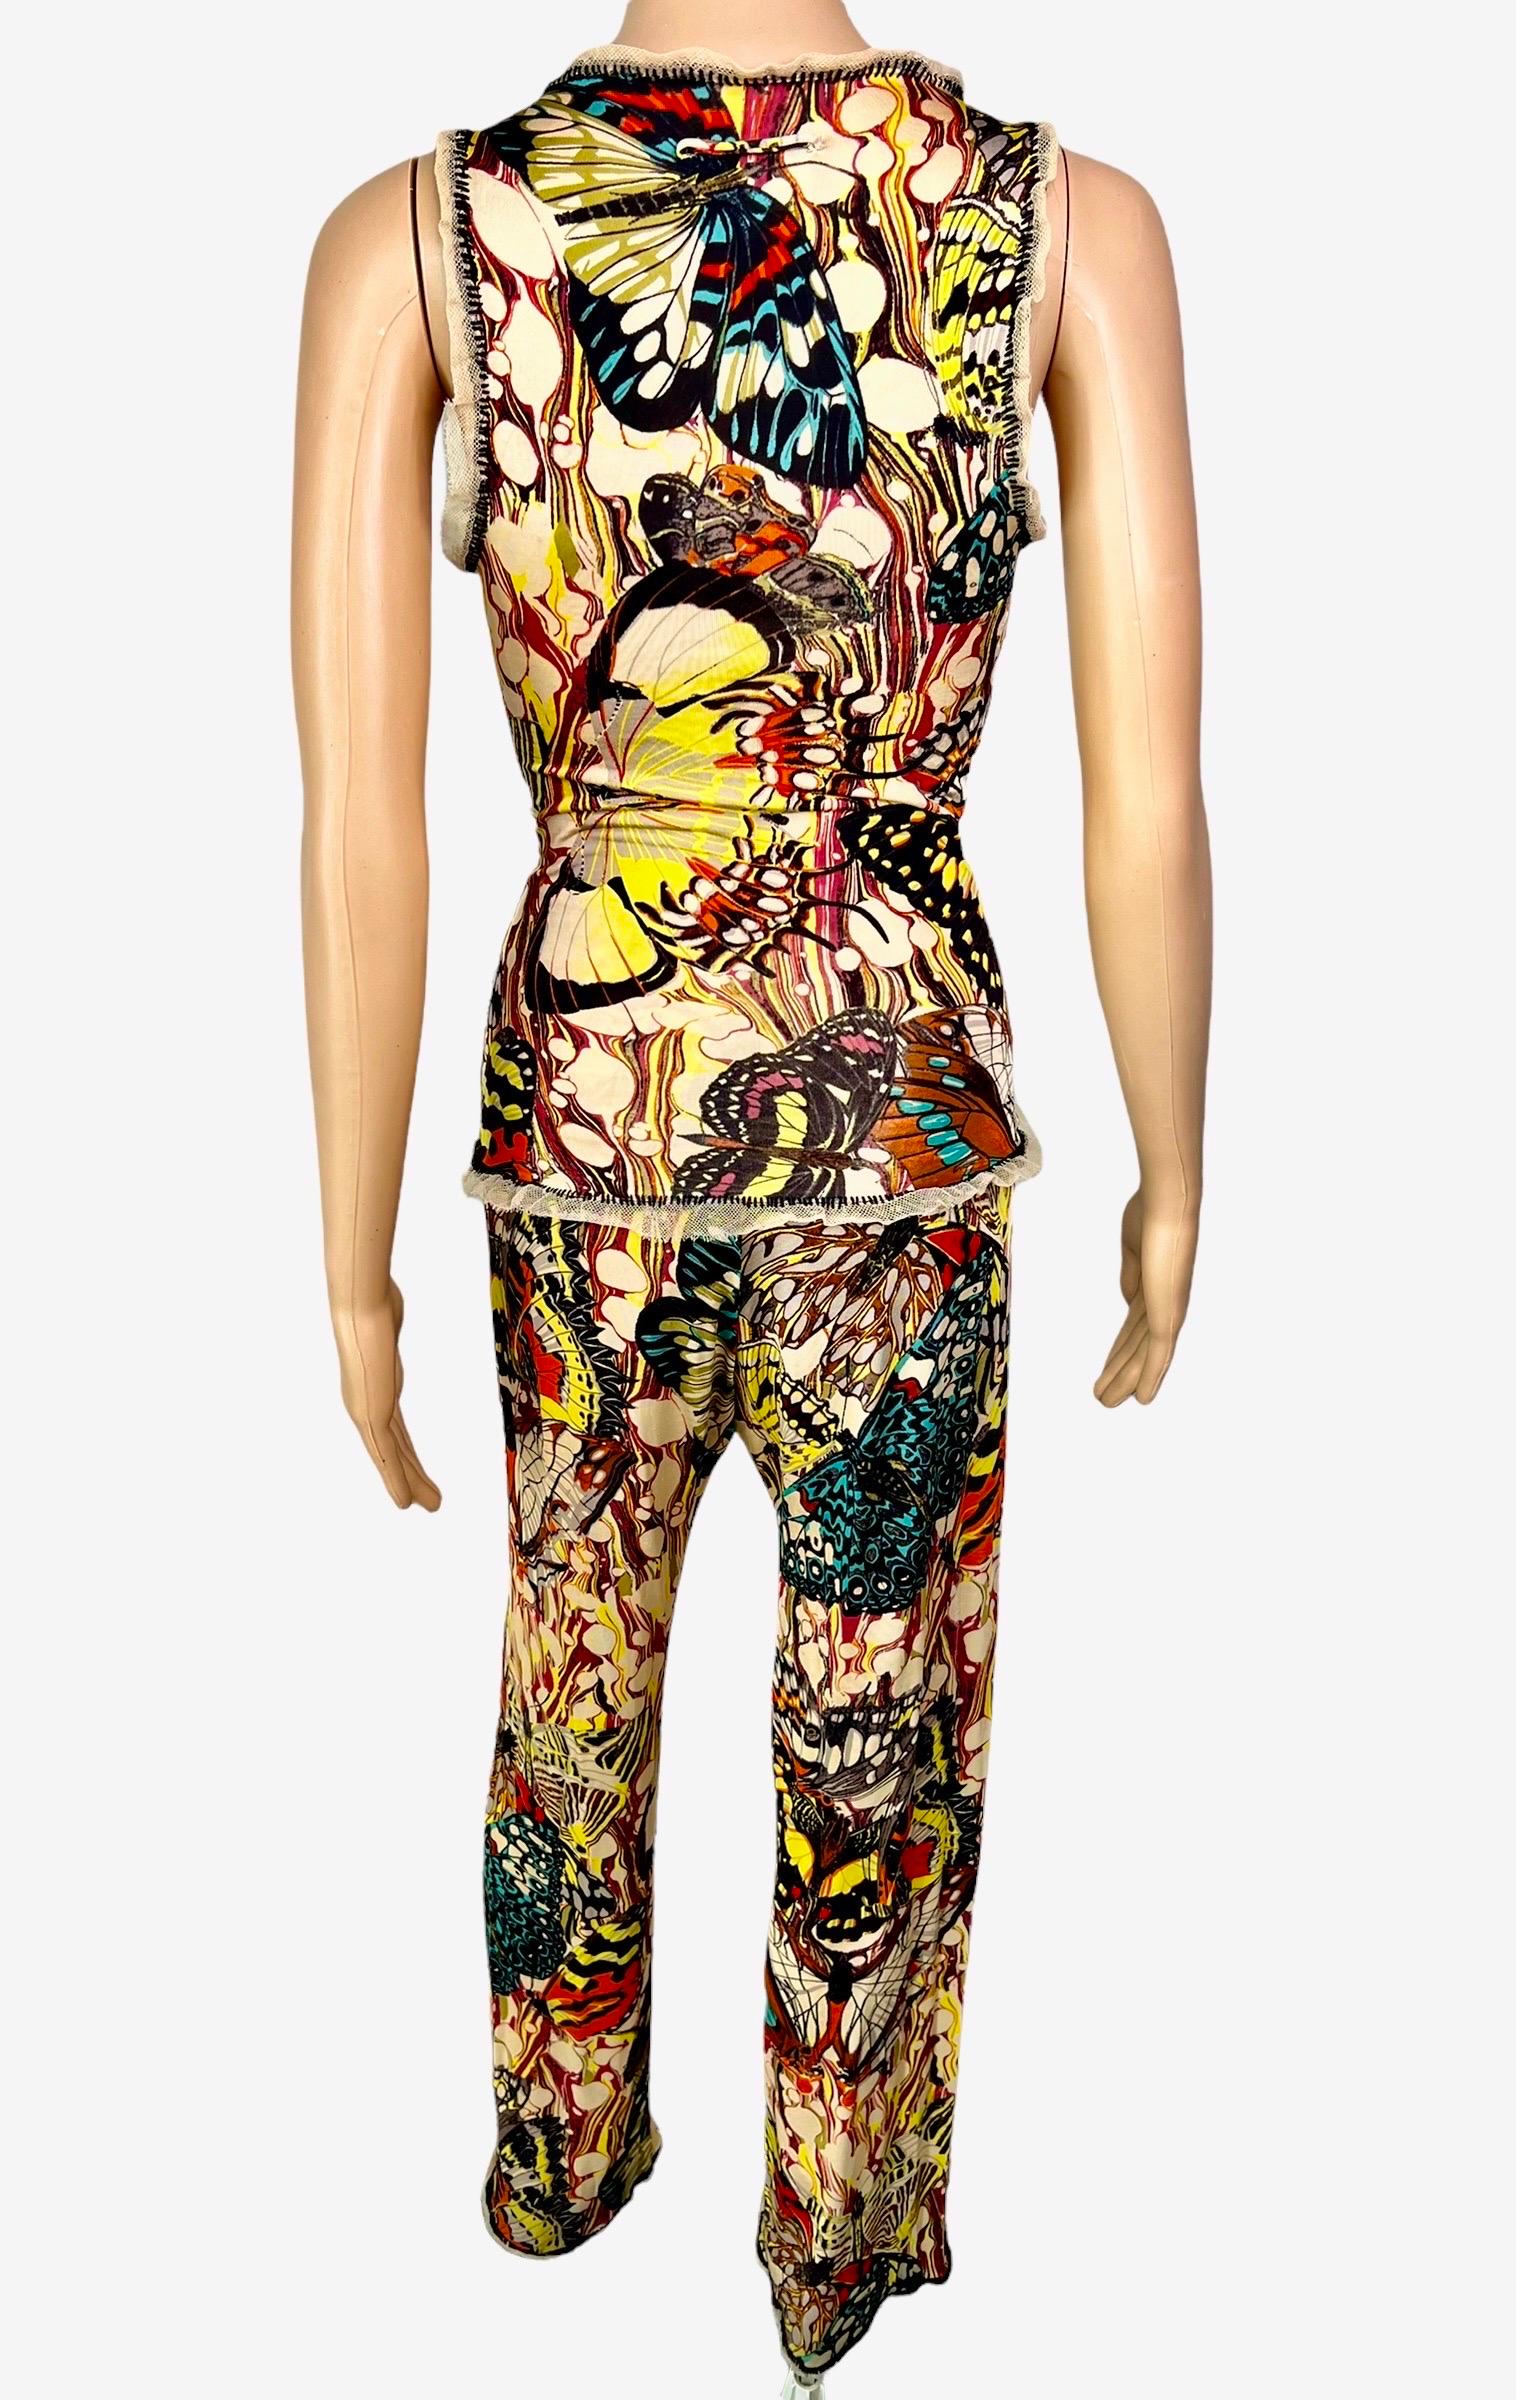 Women's or Men's Jean Paul Gaultier S/S 2003 Butterfly Print Top & Pants Ensemble 2 Piece Set  For Sale